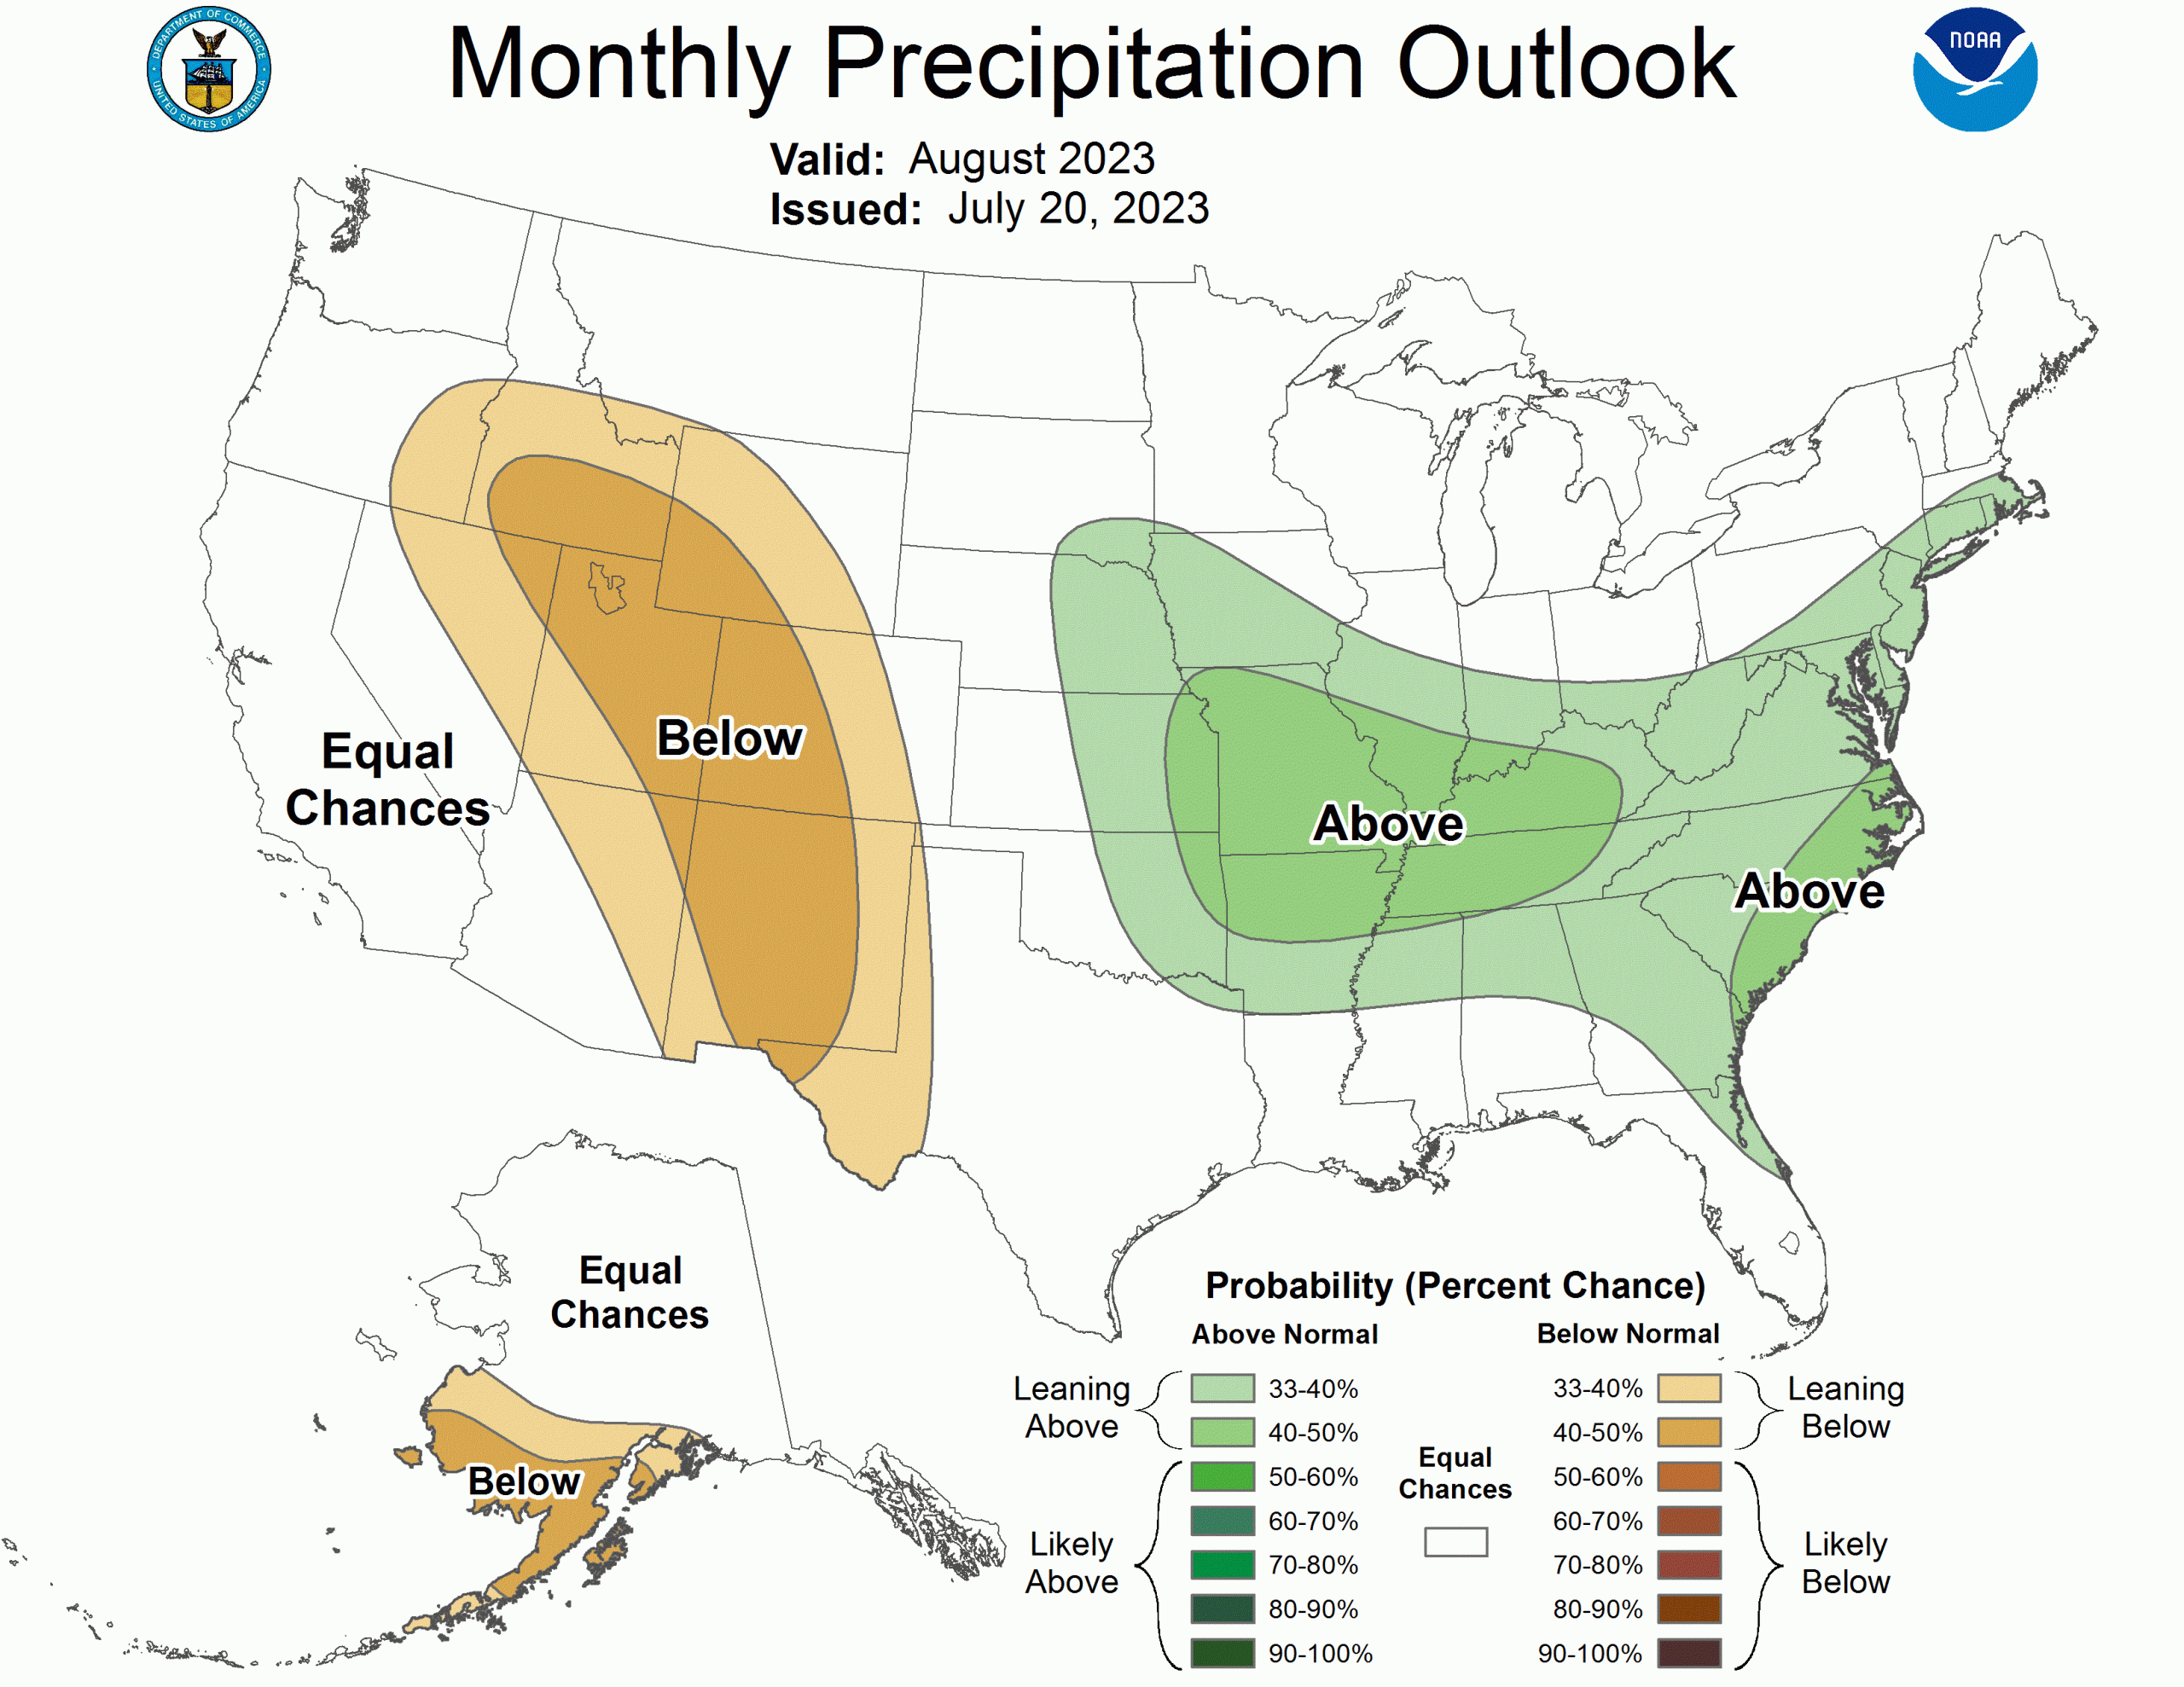 August 2023 outlook precipitation